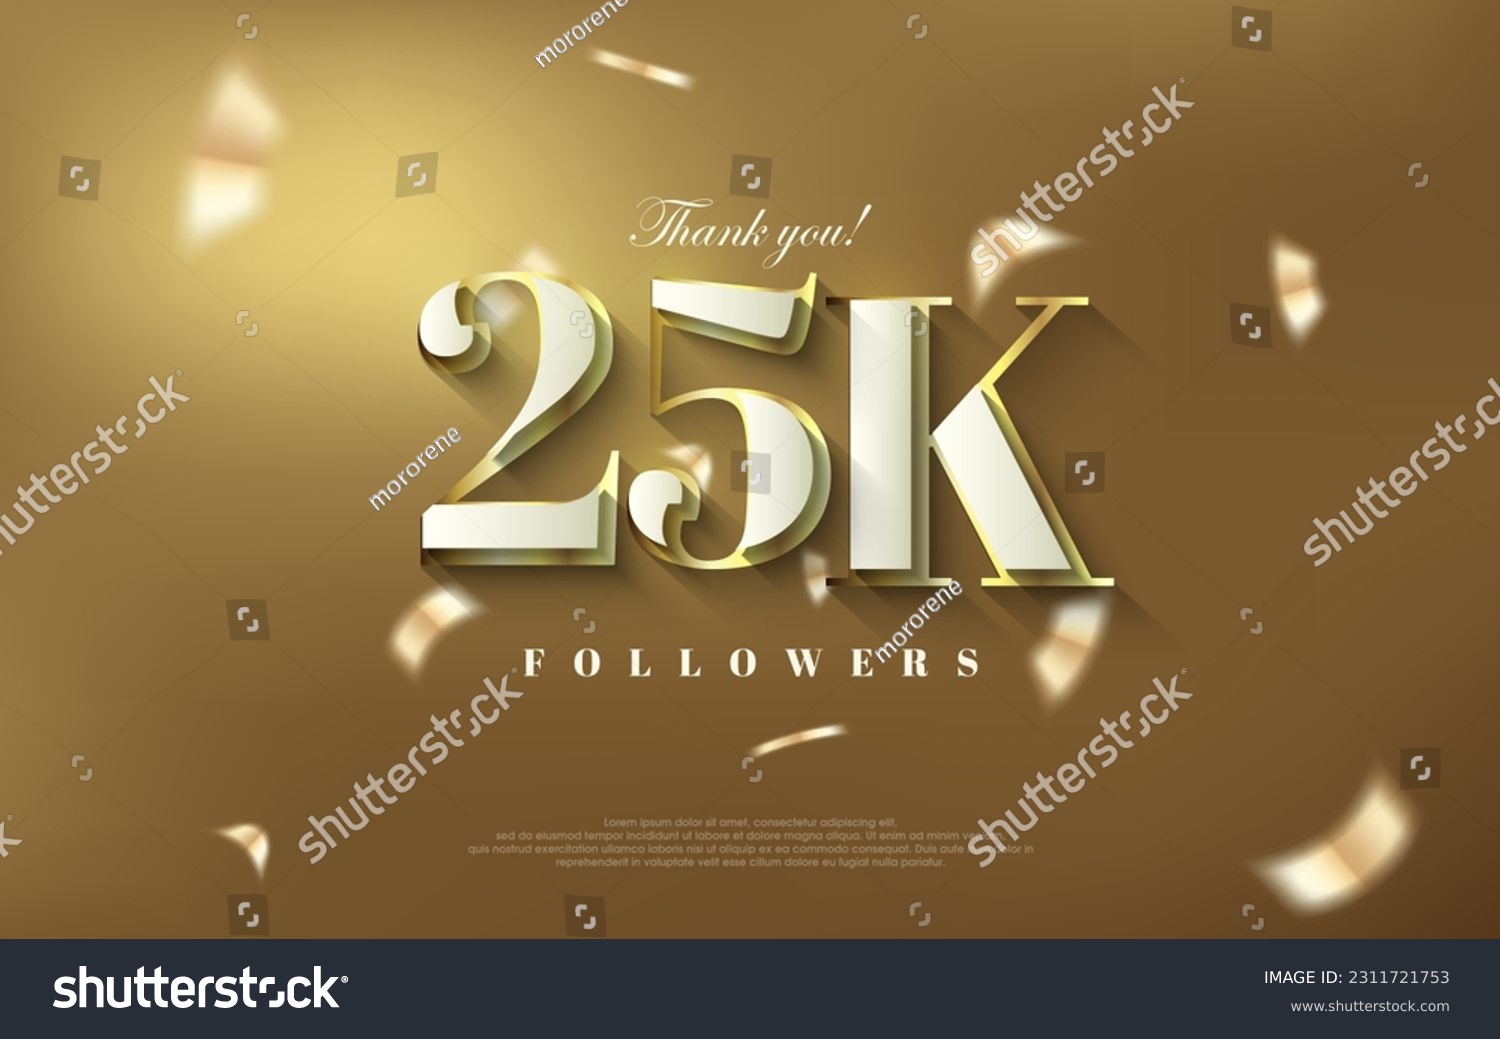 SVG of Thank you 25k followers background, shiny luxury gold design. svg